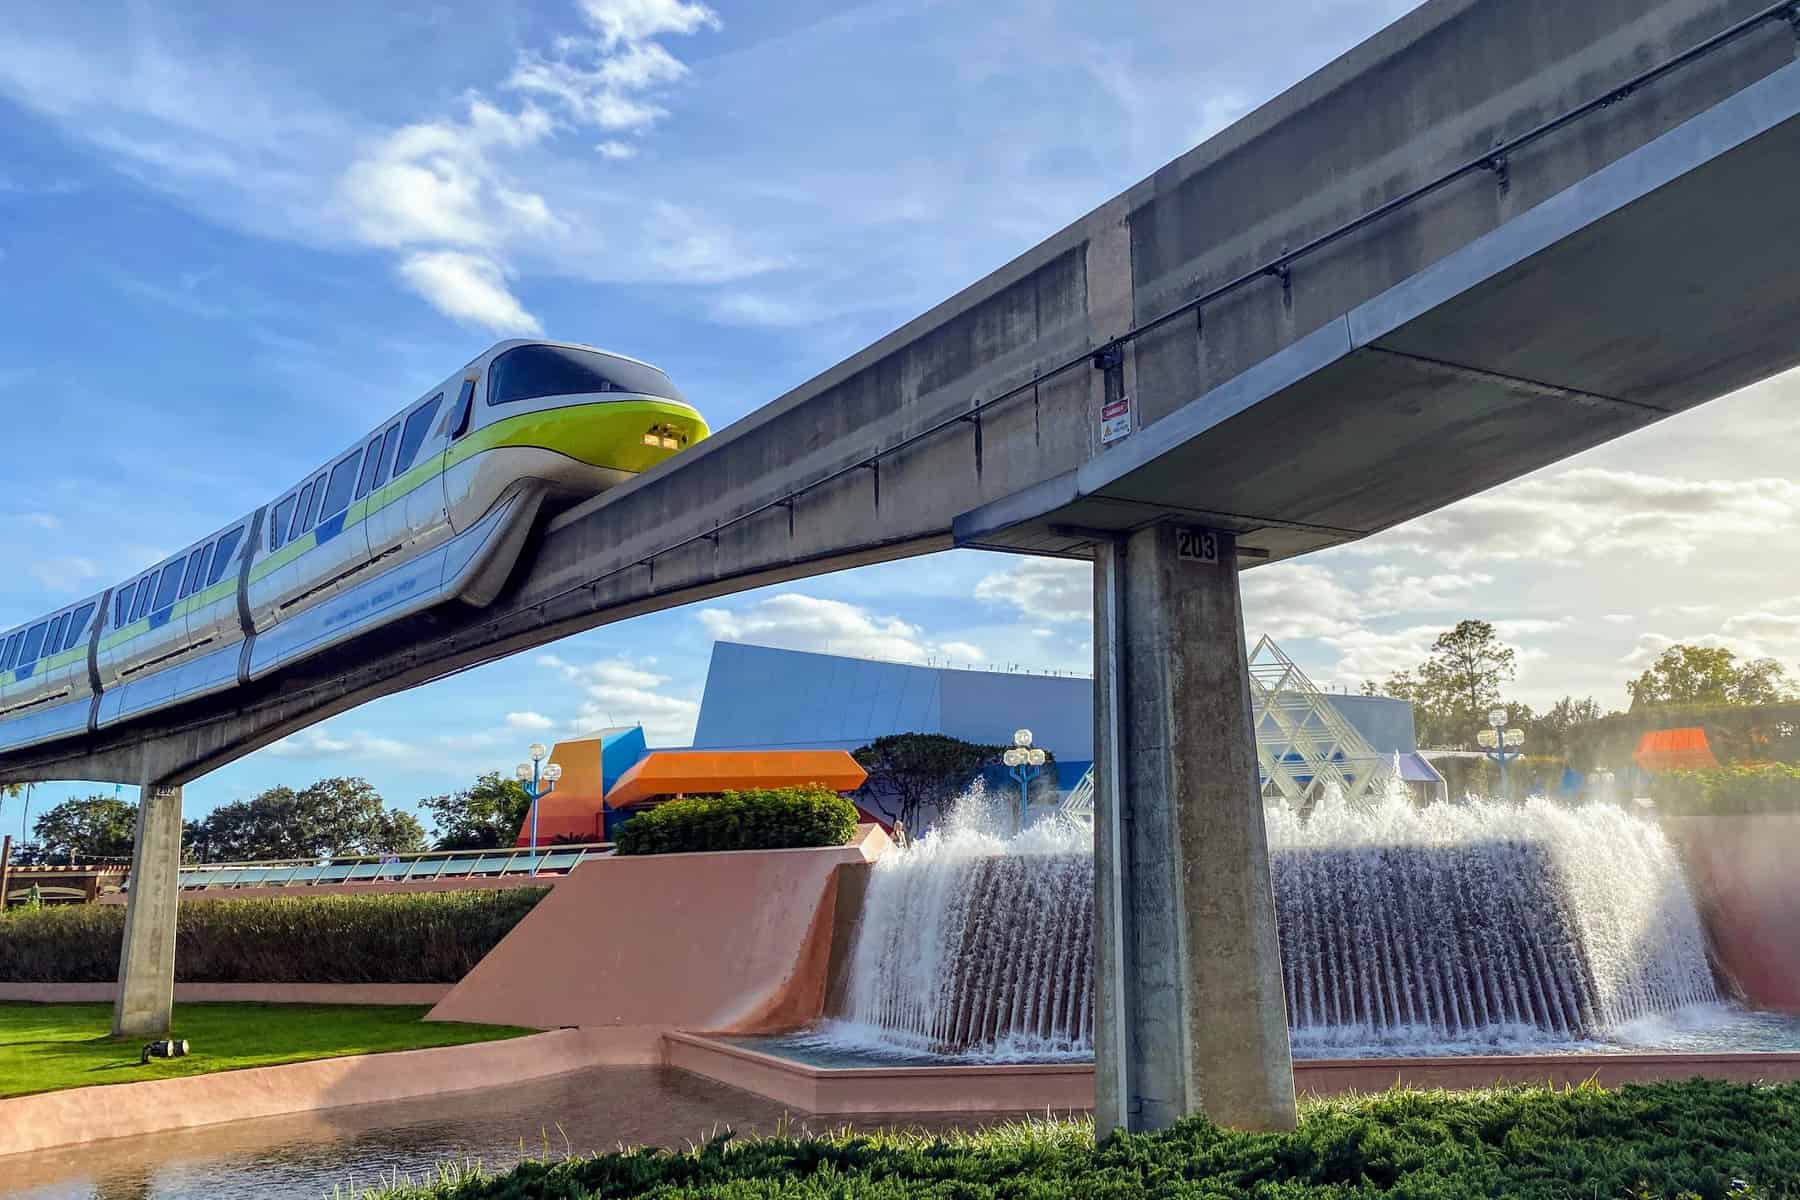 Park-to-Park Transportation Set To Resume In 2021 At Walt Disney World